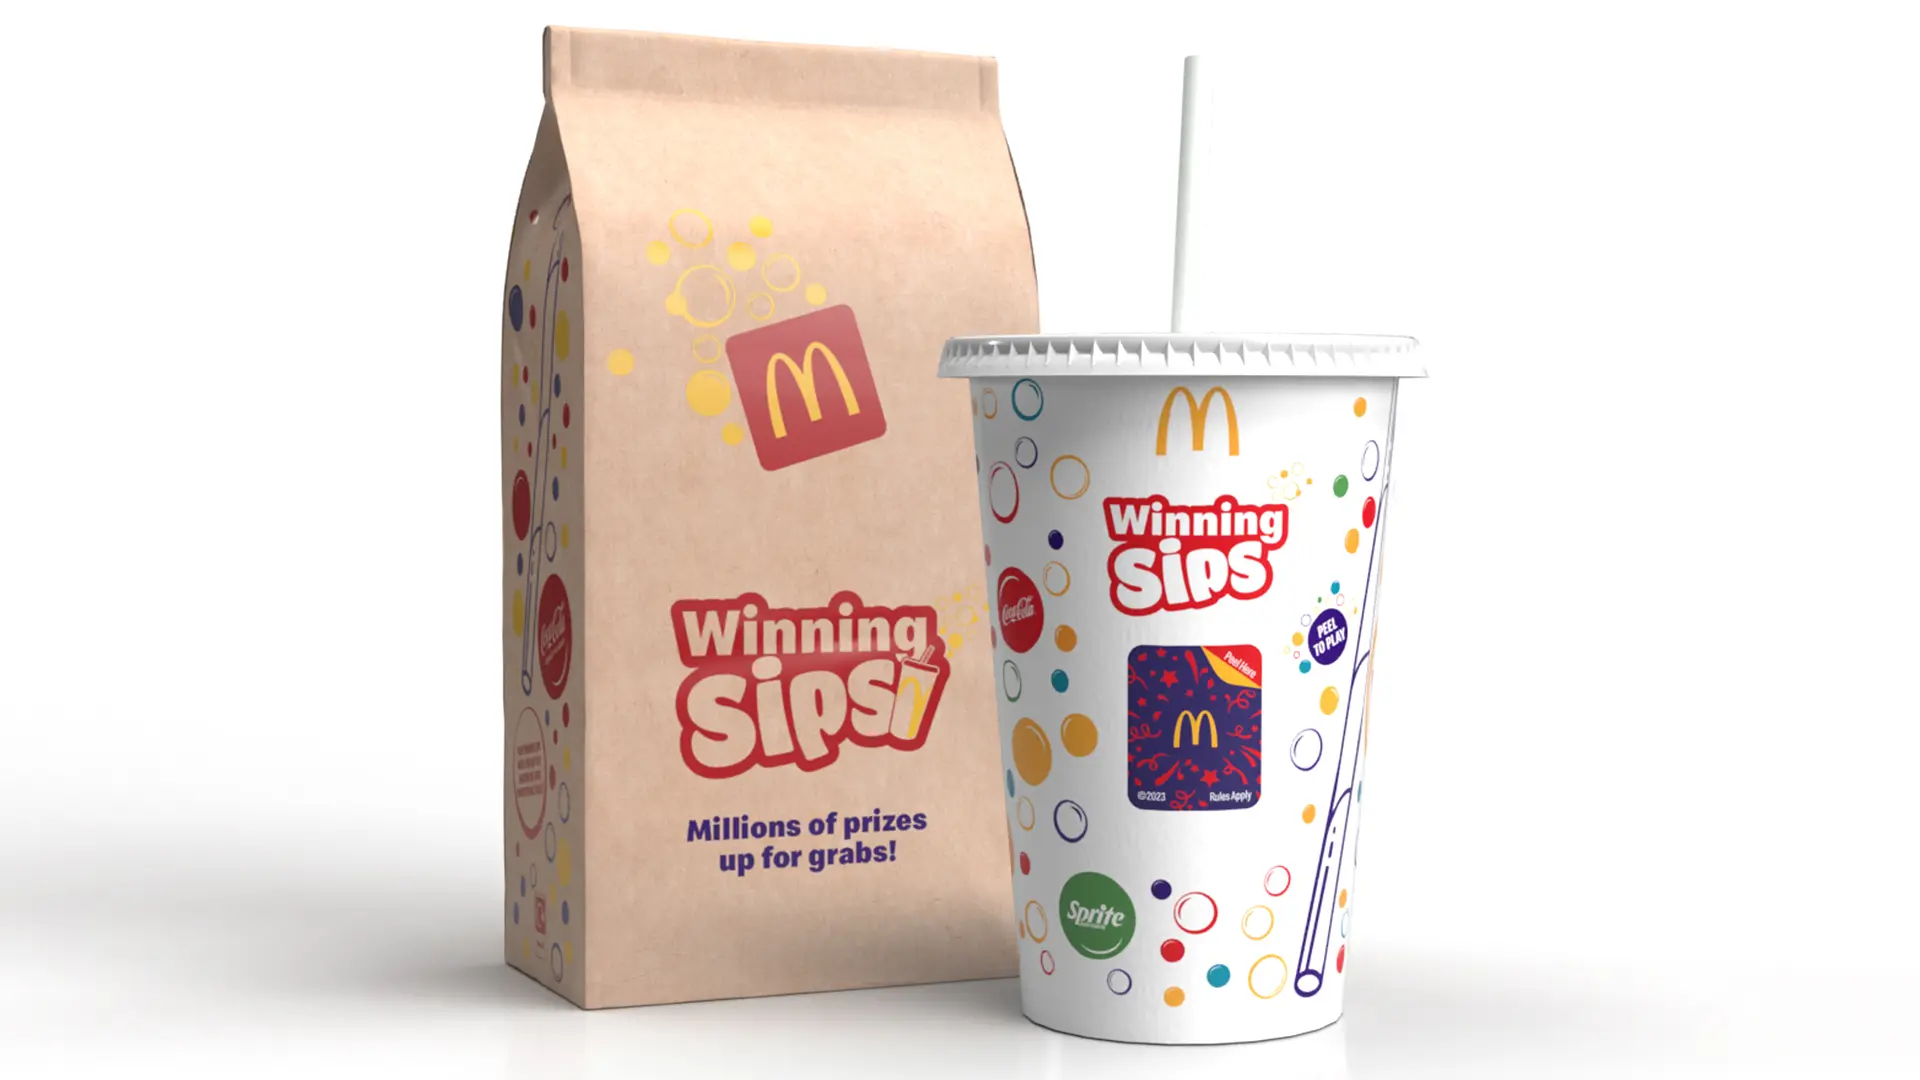 McDonald's Winning Sips meal